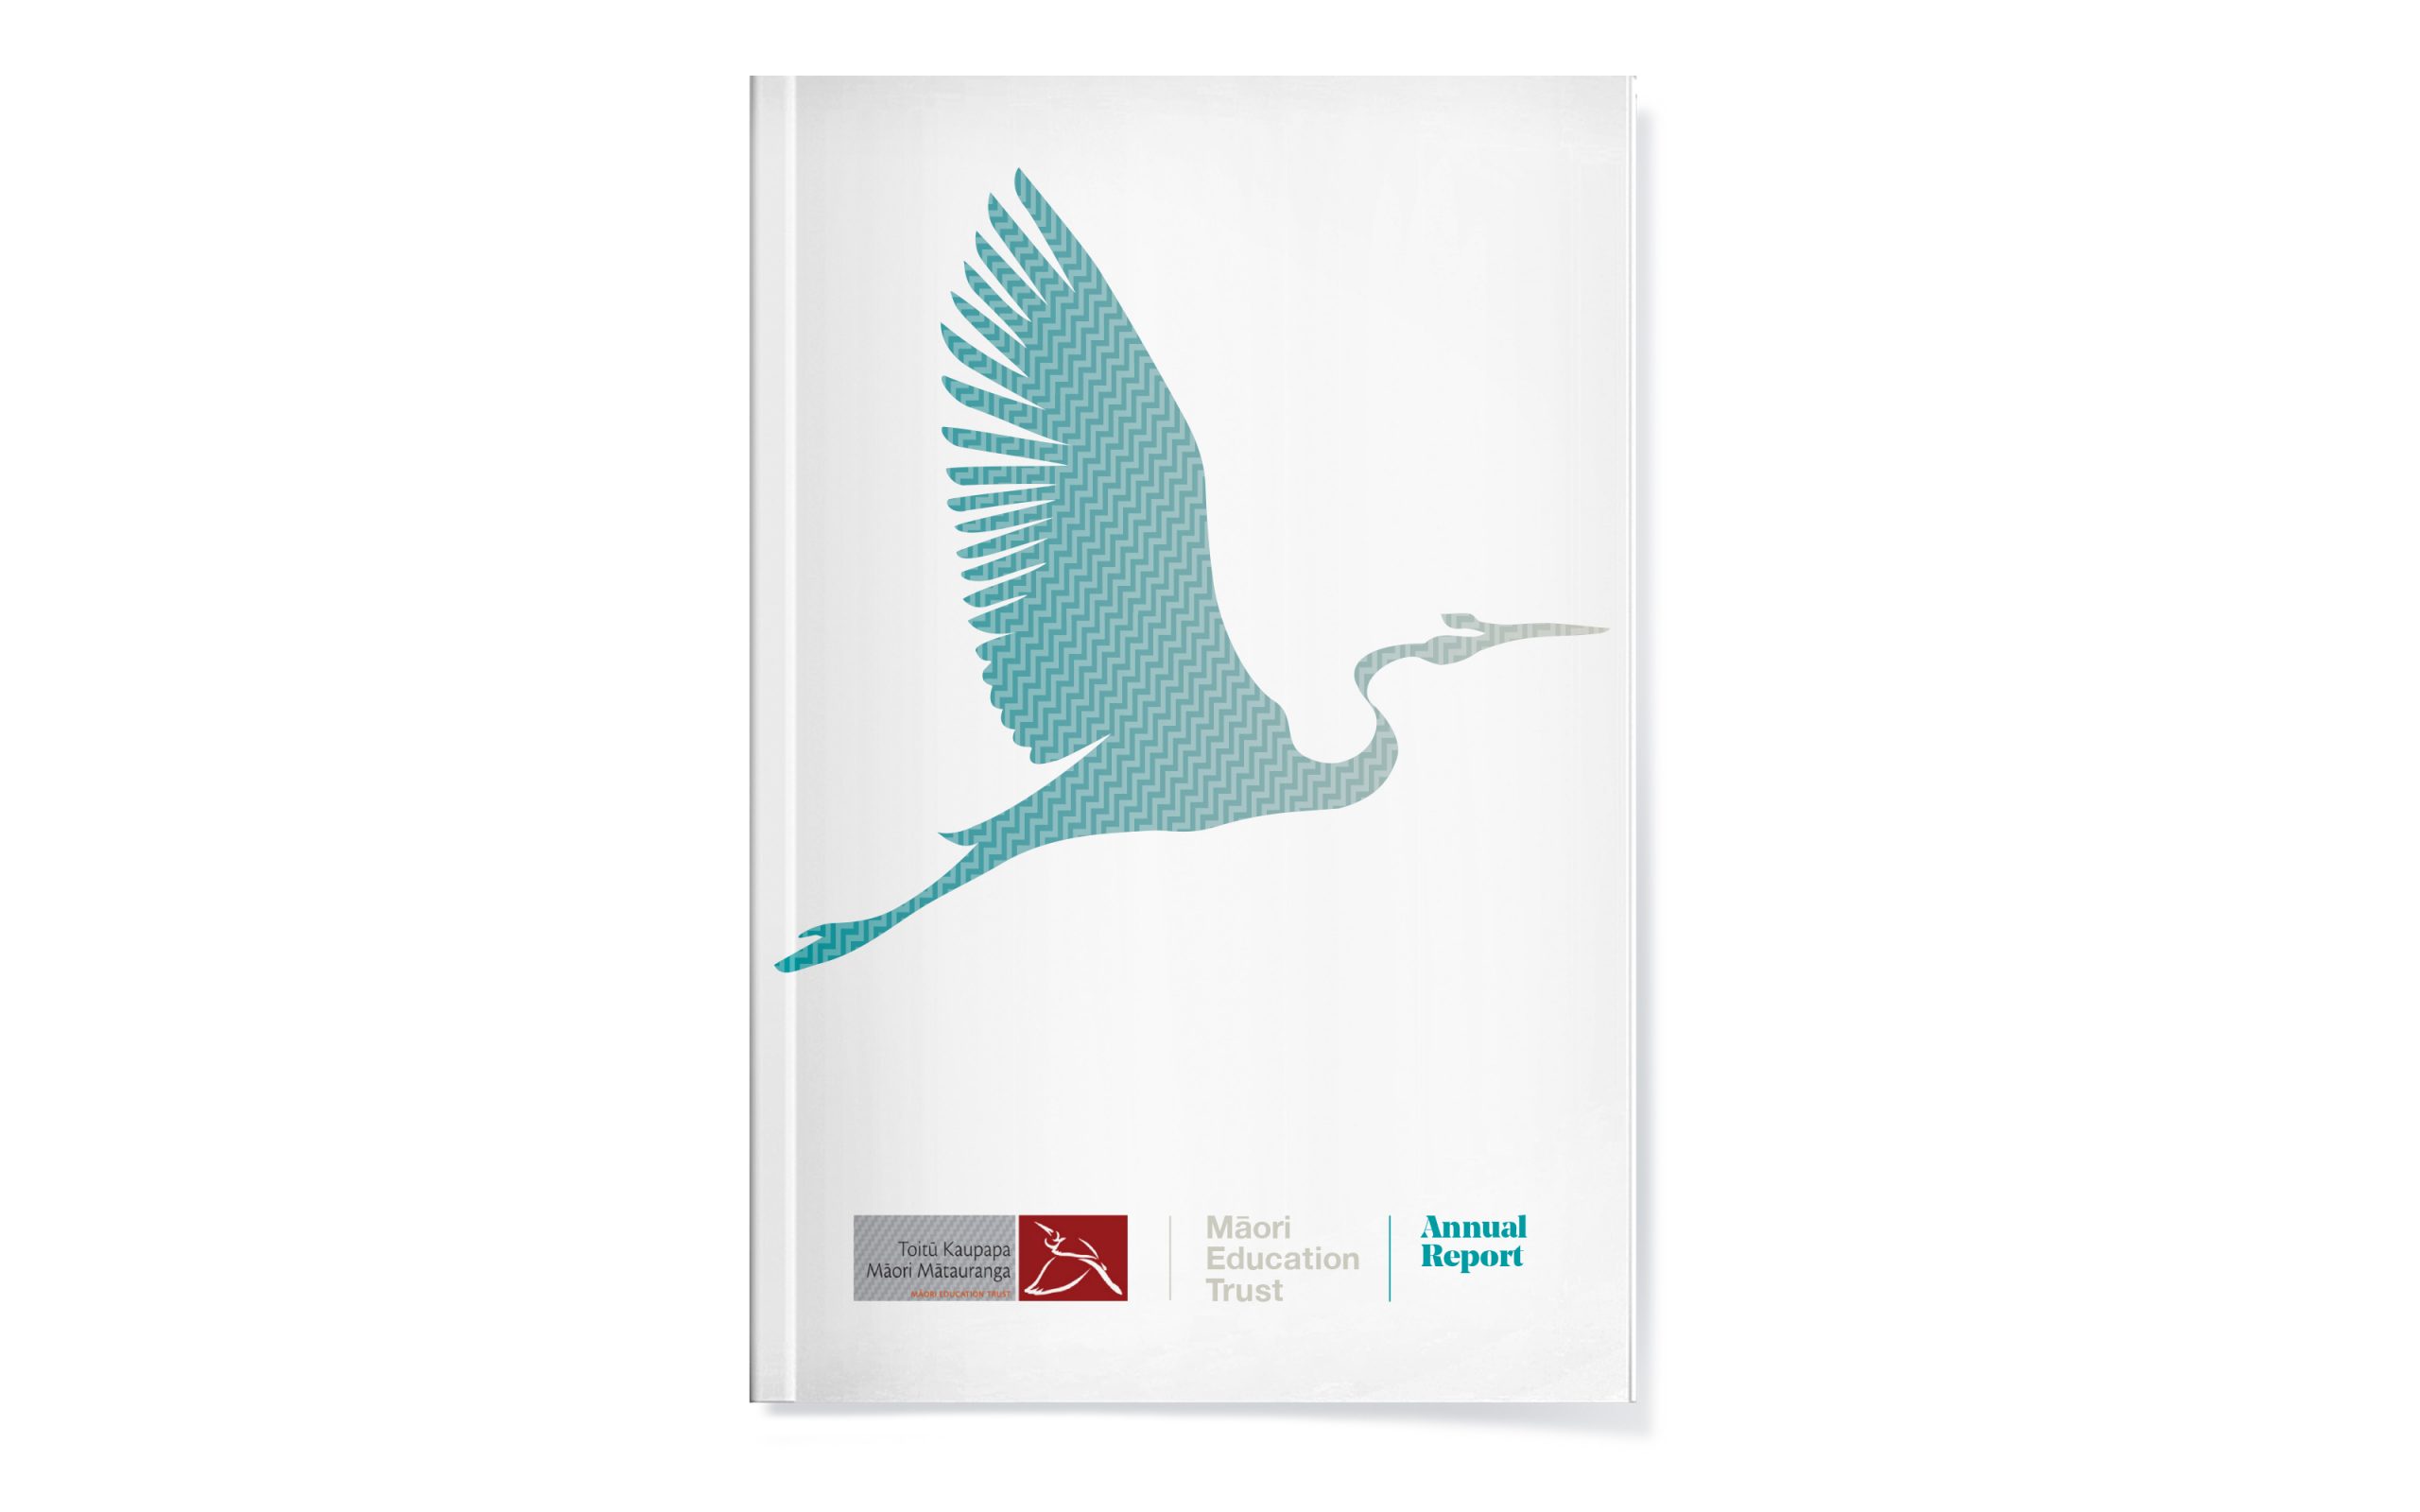 Creative Branding - Māori Education publication designed by re:brand